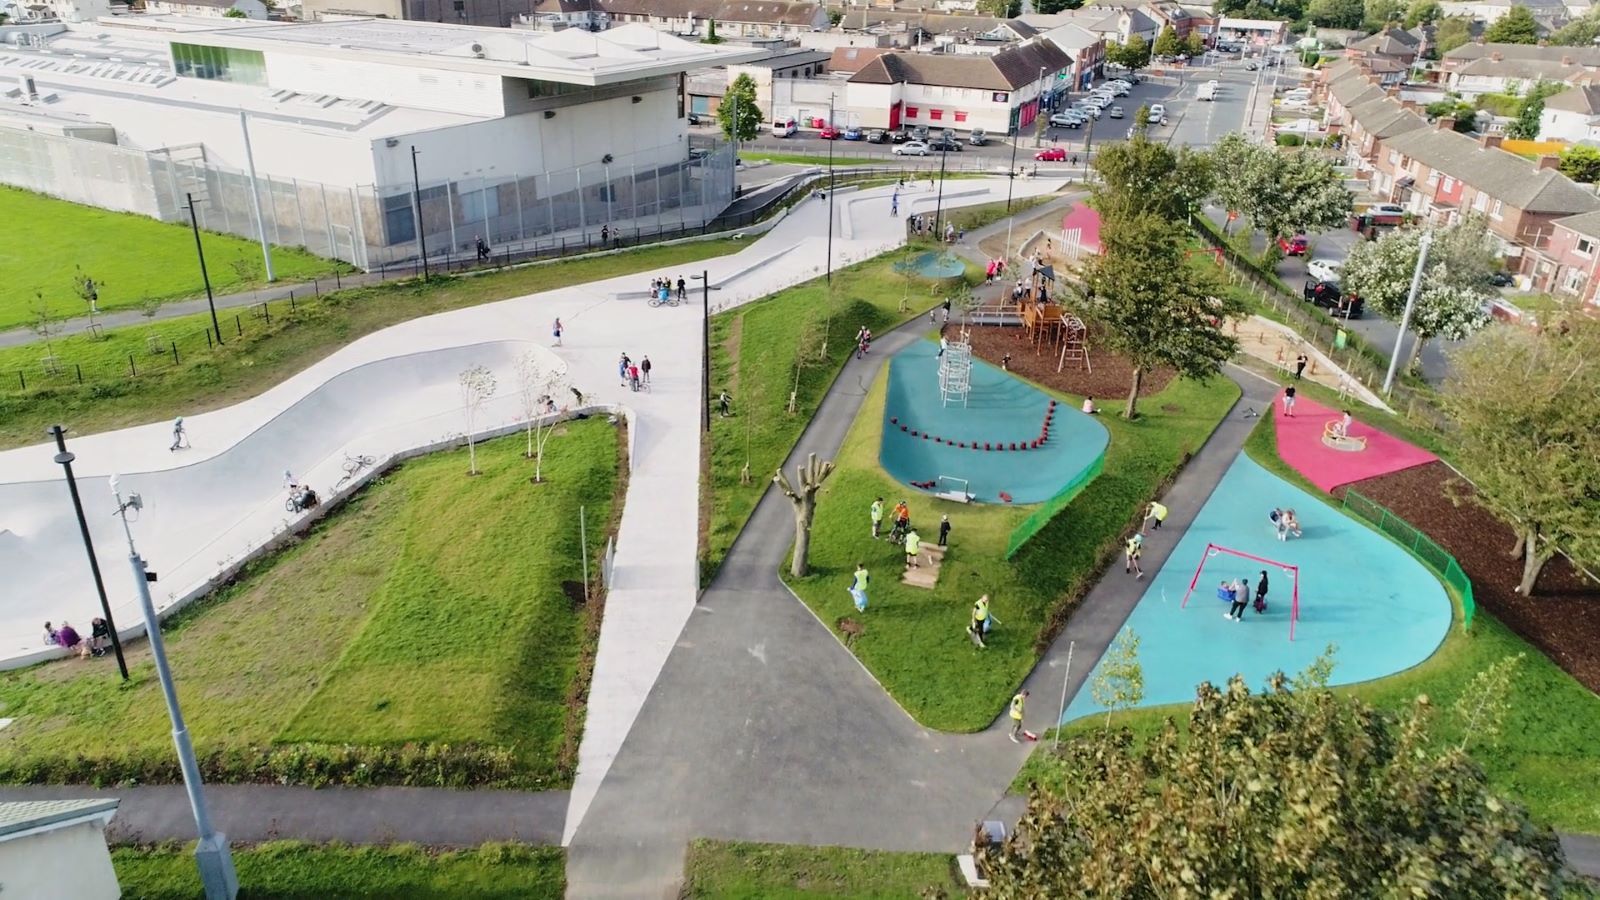 Ballyfermot Skate Bowl and Plaza wins Overall Irish Concrete Society Award for 2022